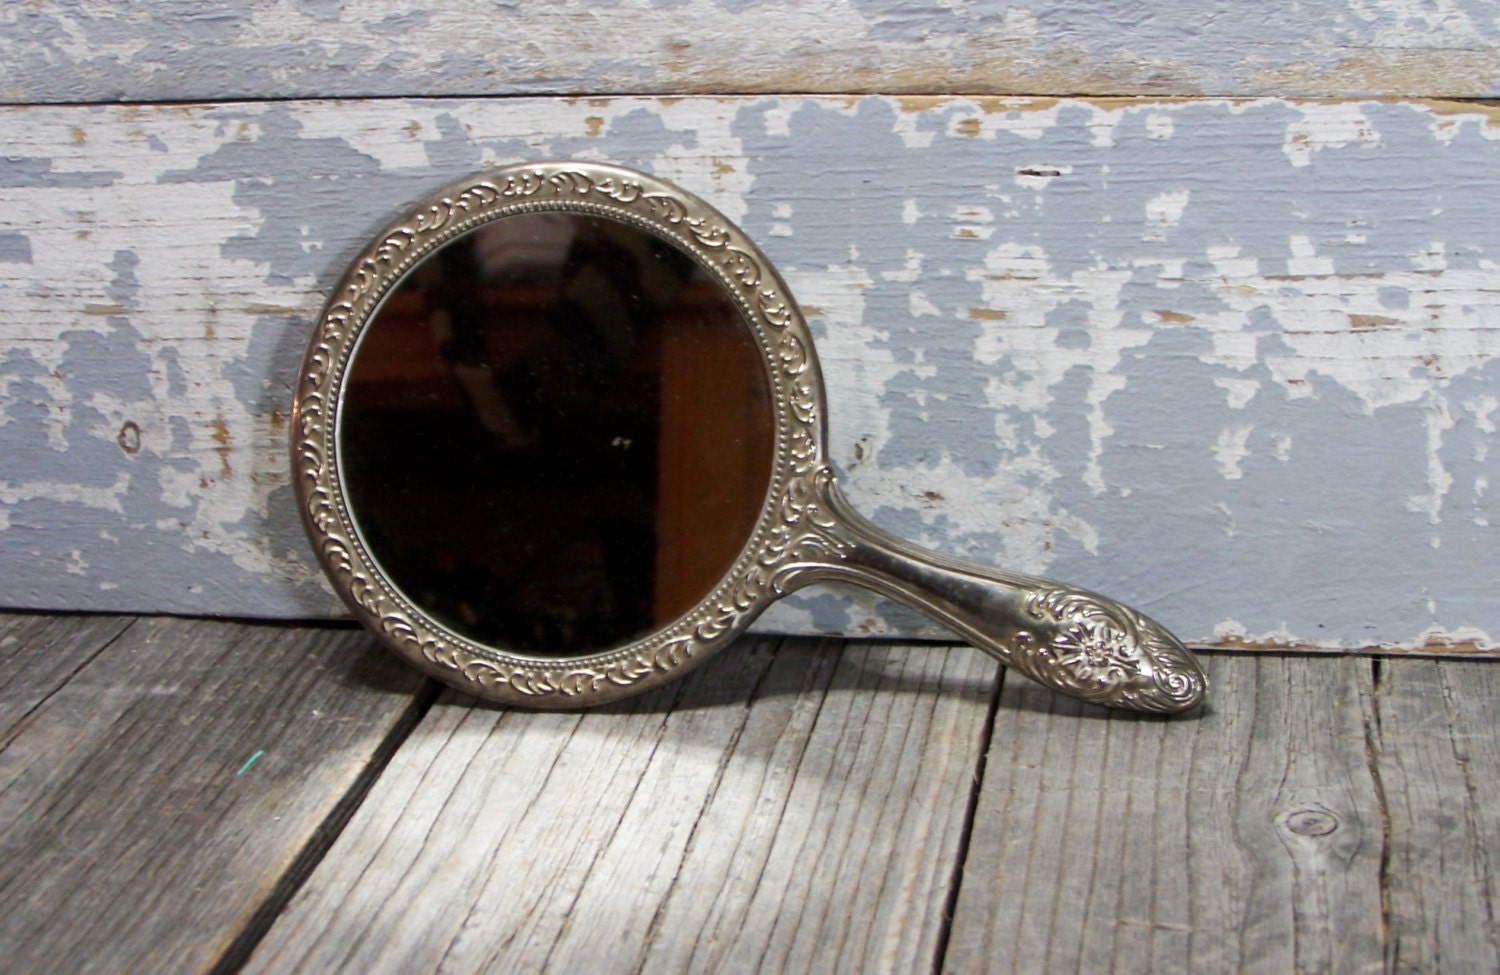 Large Hand Mirror Silverplated Ornate Victorian Style Make Up Mirror Engraved "Best Friends Always" - SexyTrashVintage